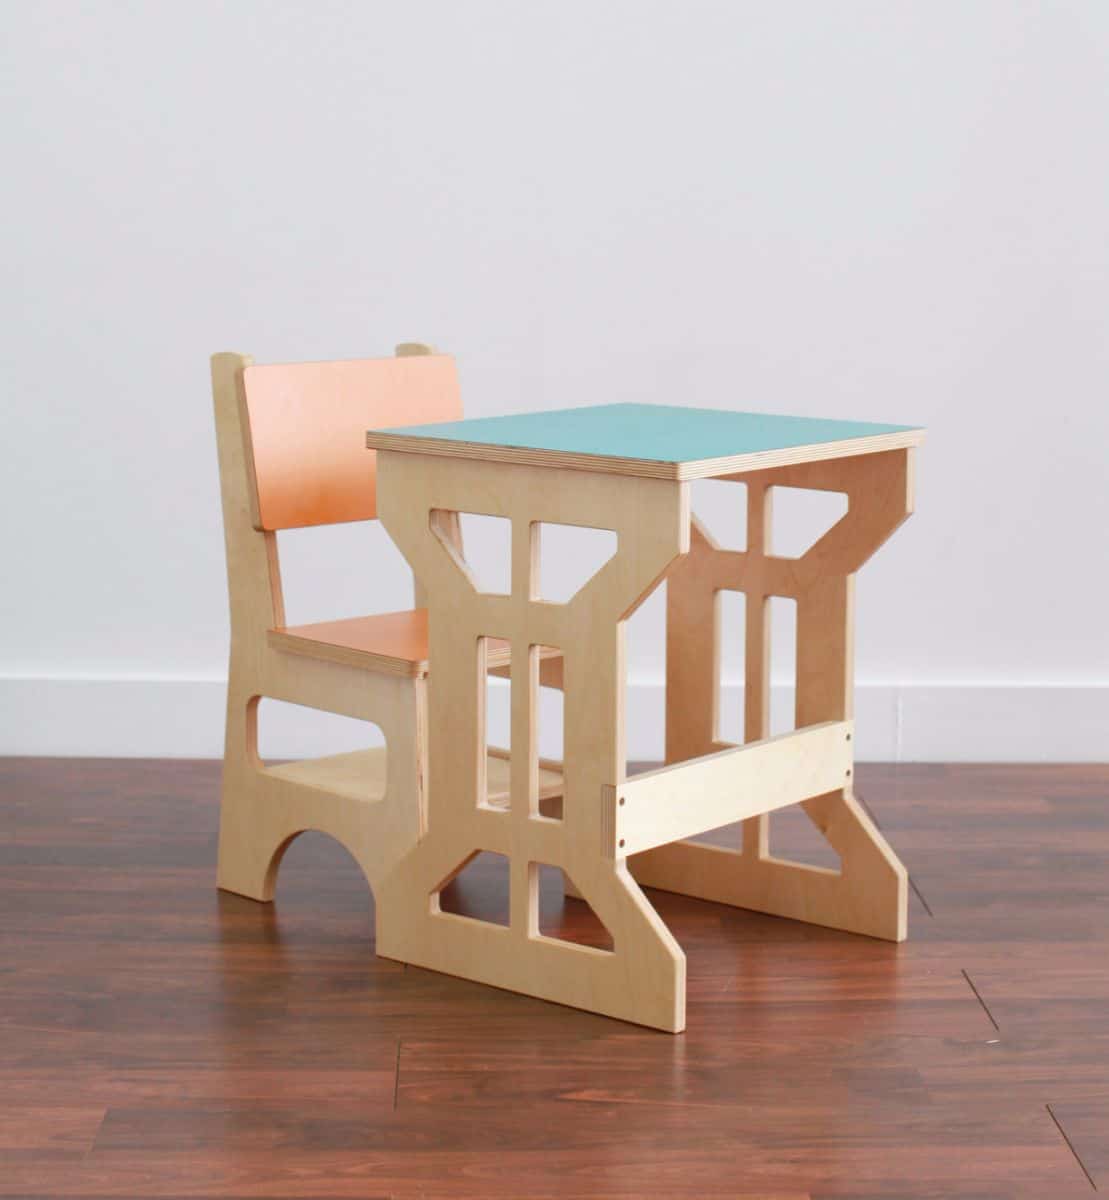 wooden furniture for kids